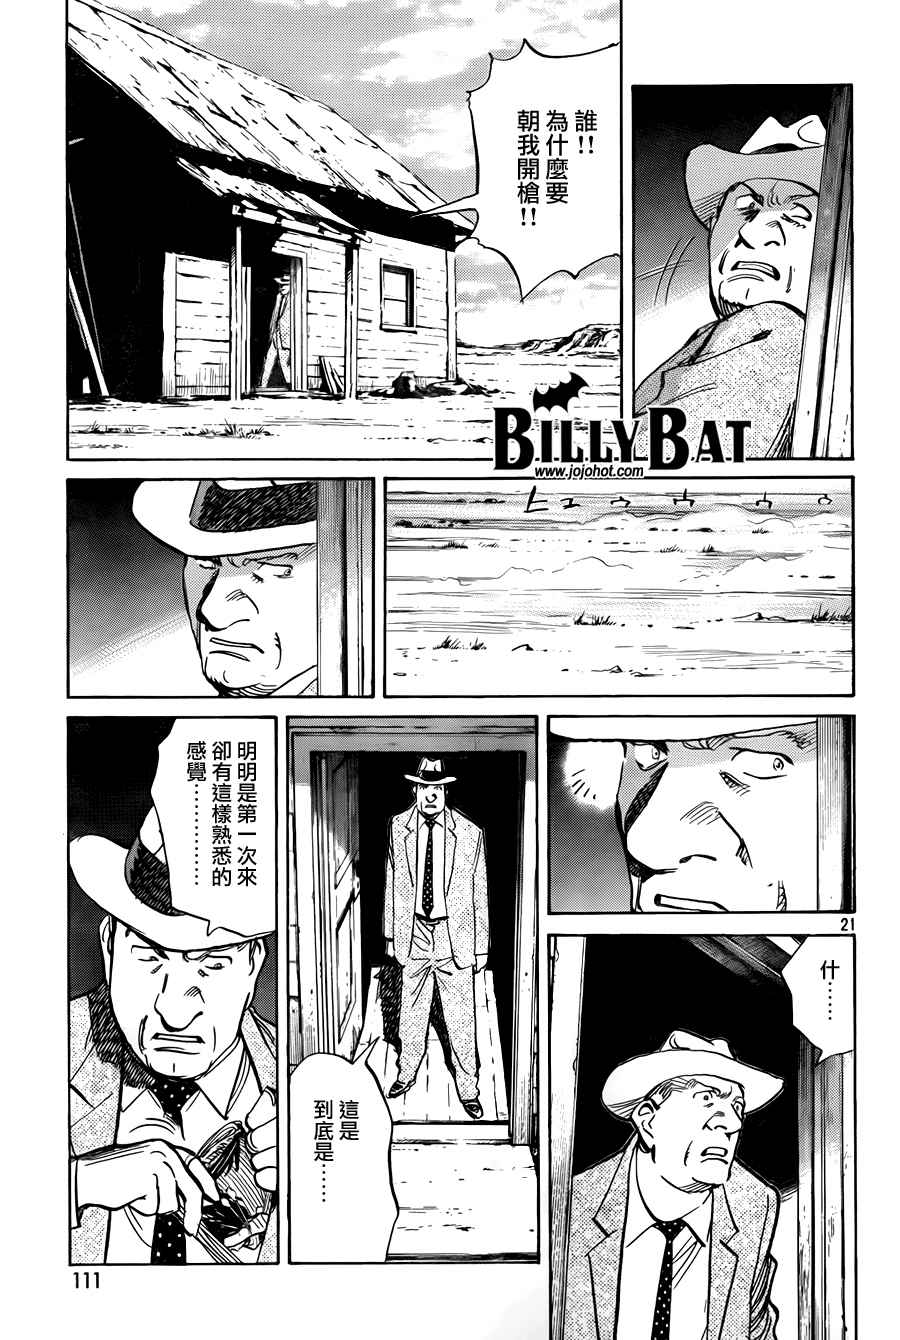 Billy_Bat - 第4卷(3/5) - 1